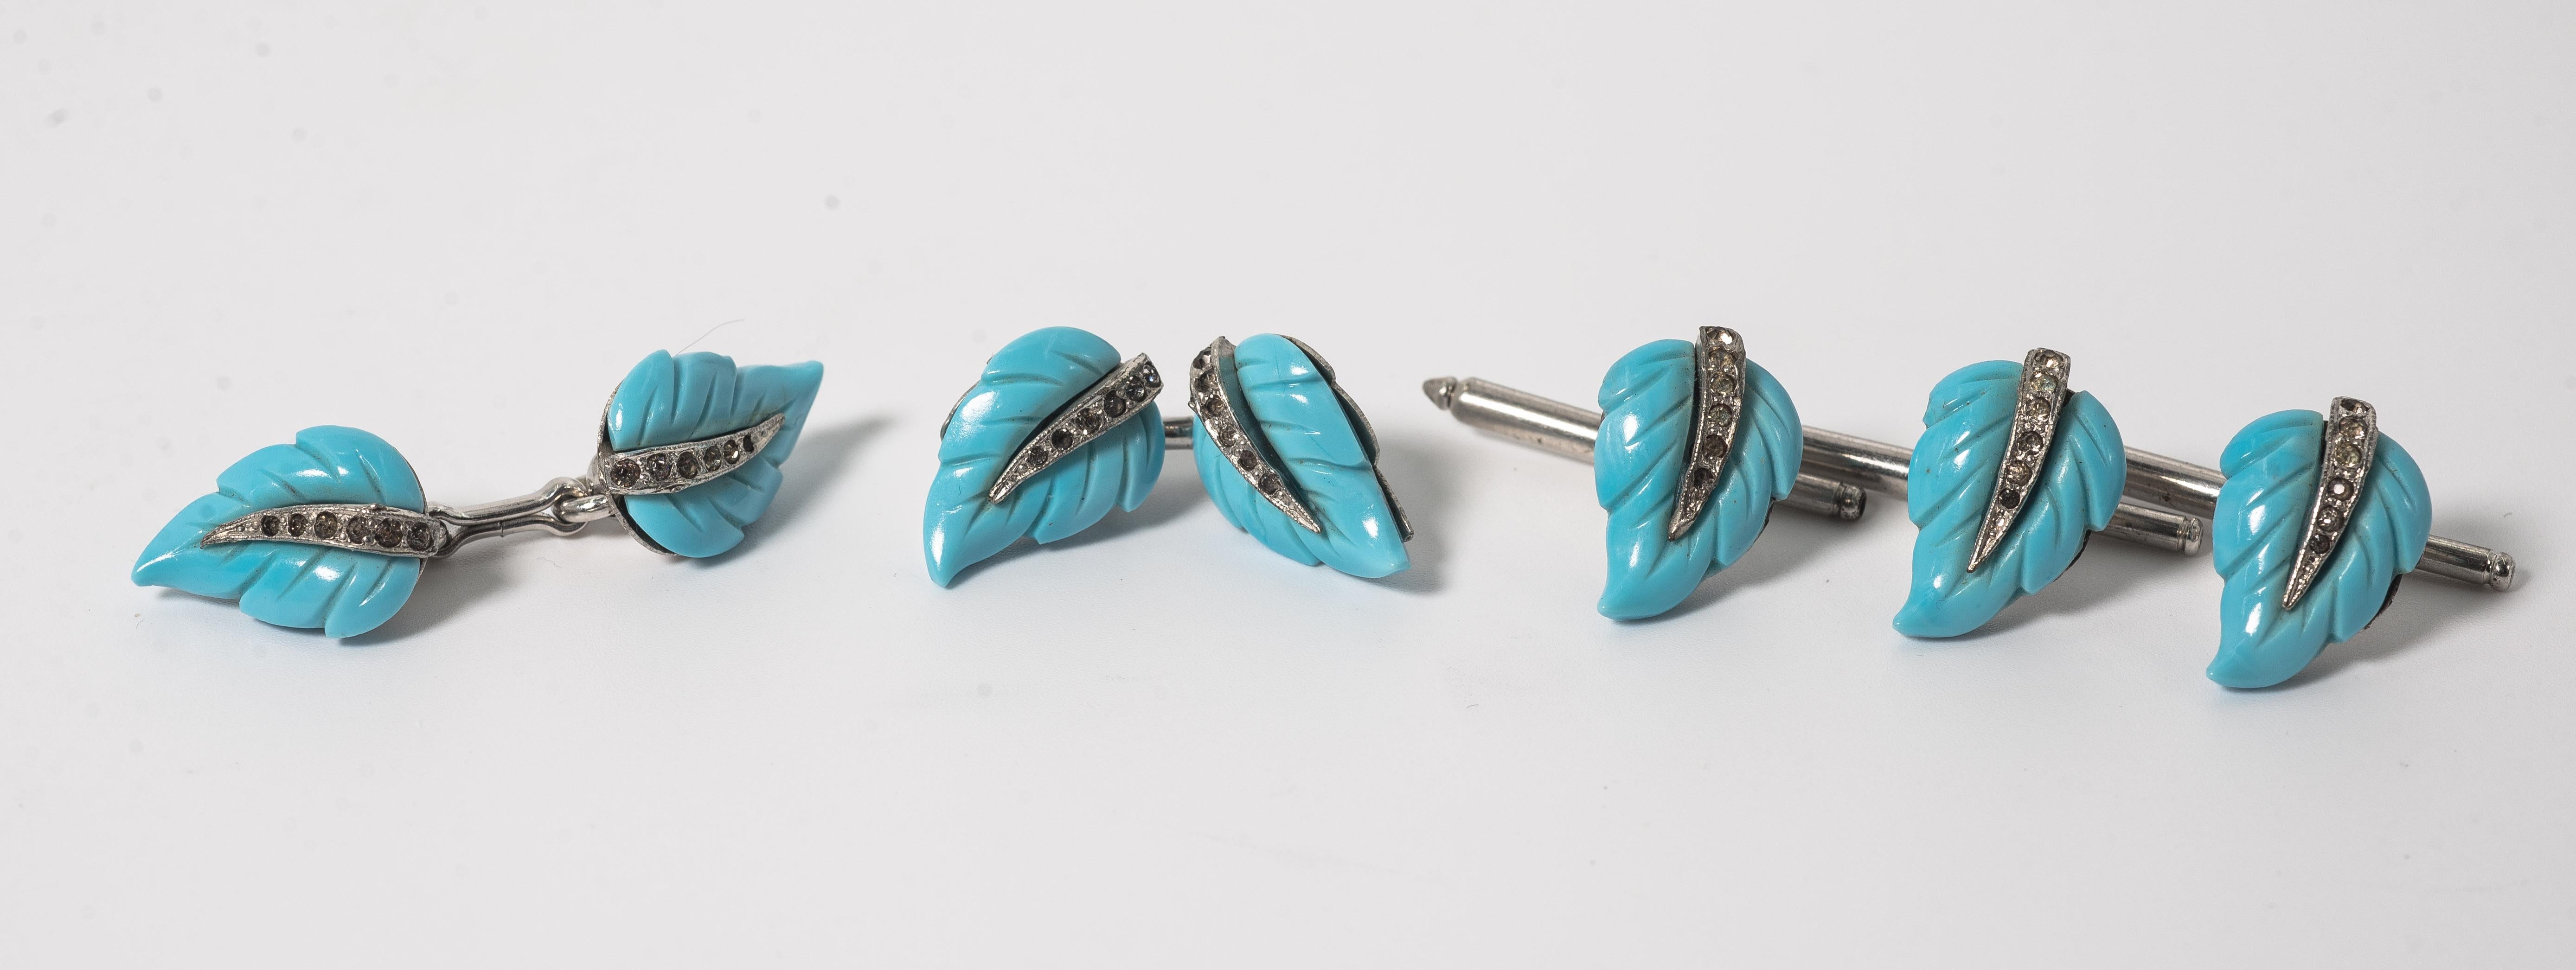 mens turquoise earrings